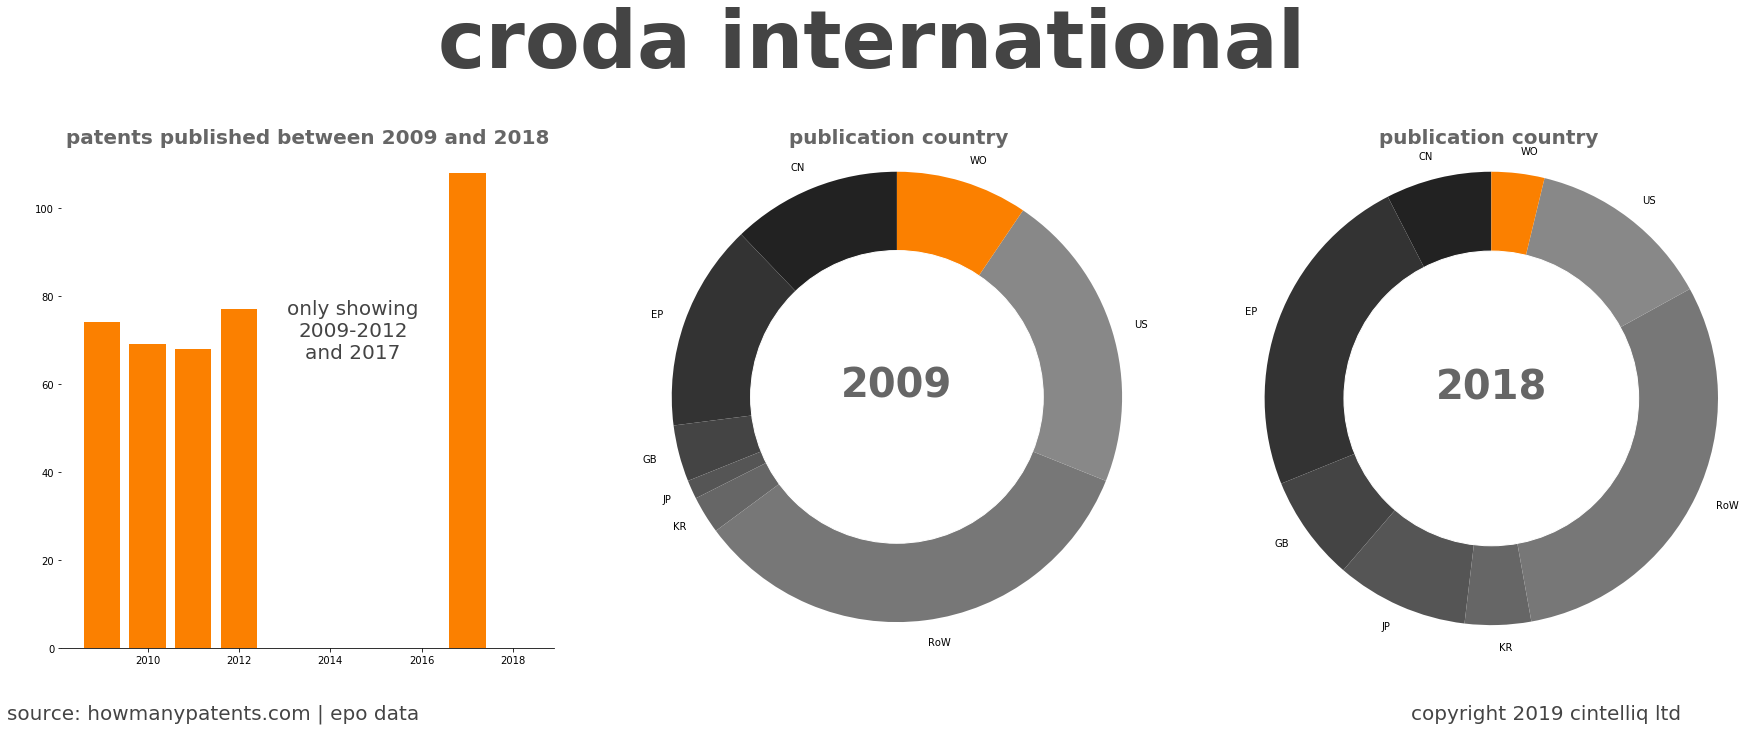 summary of patents for Croda International